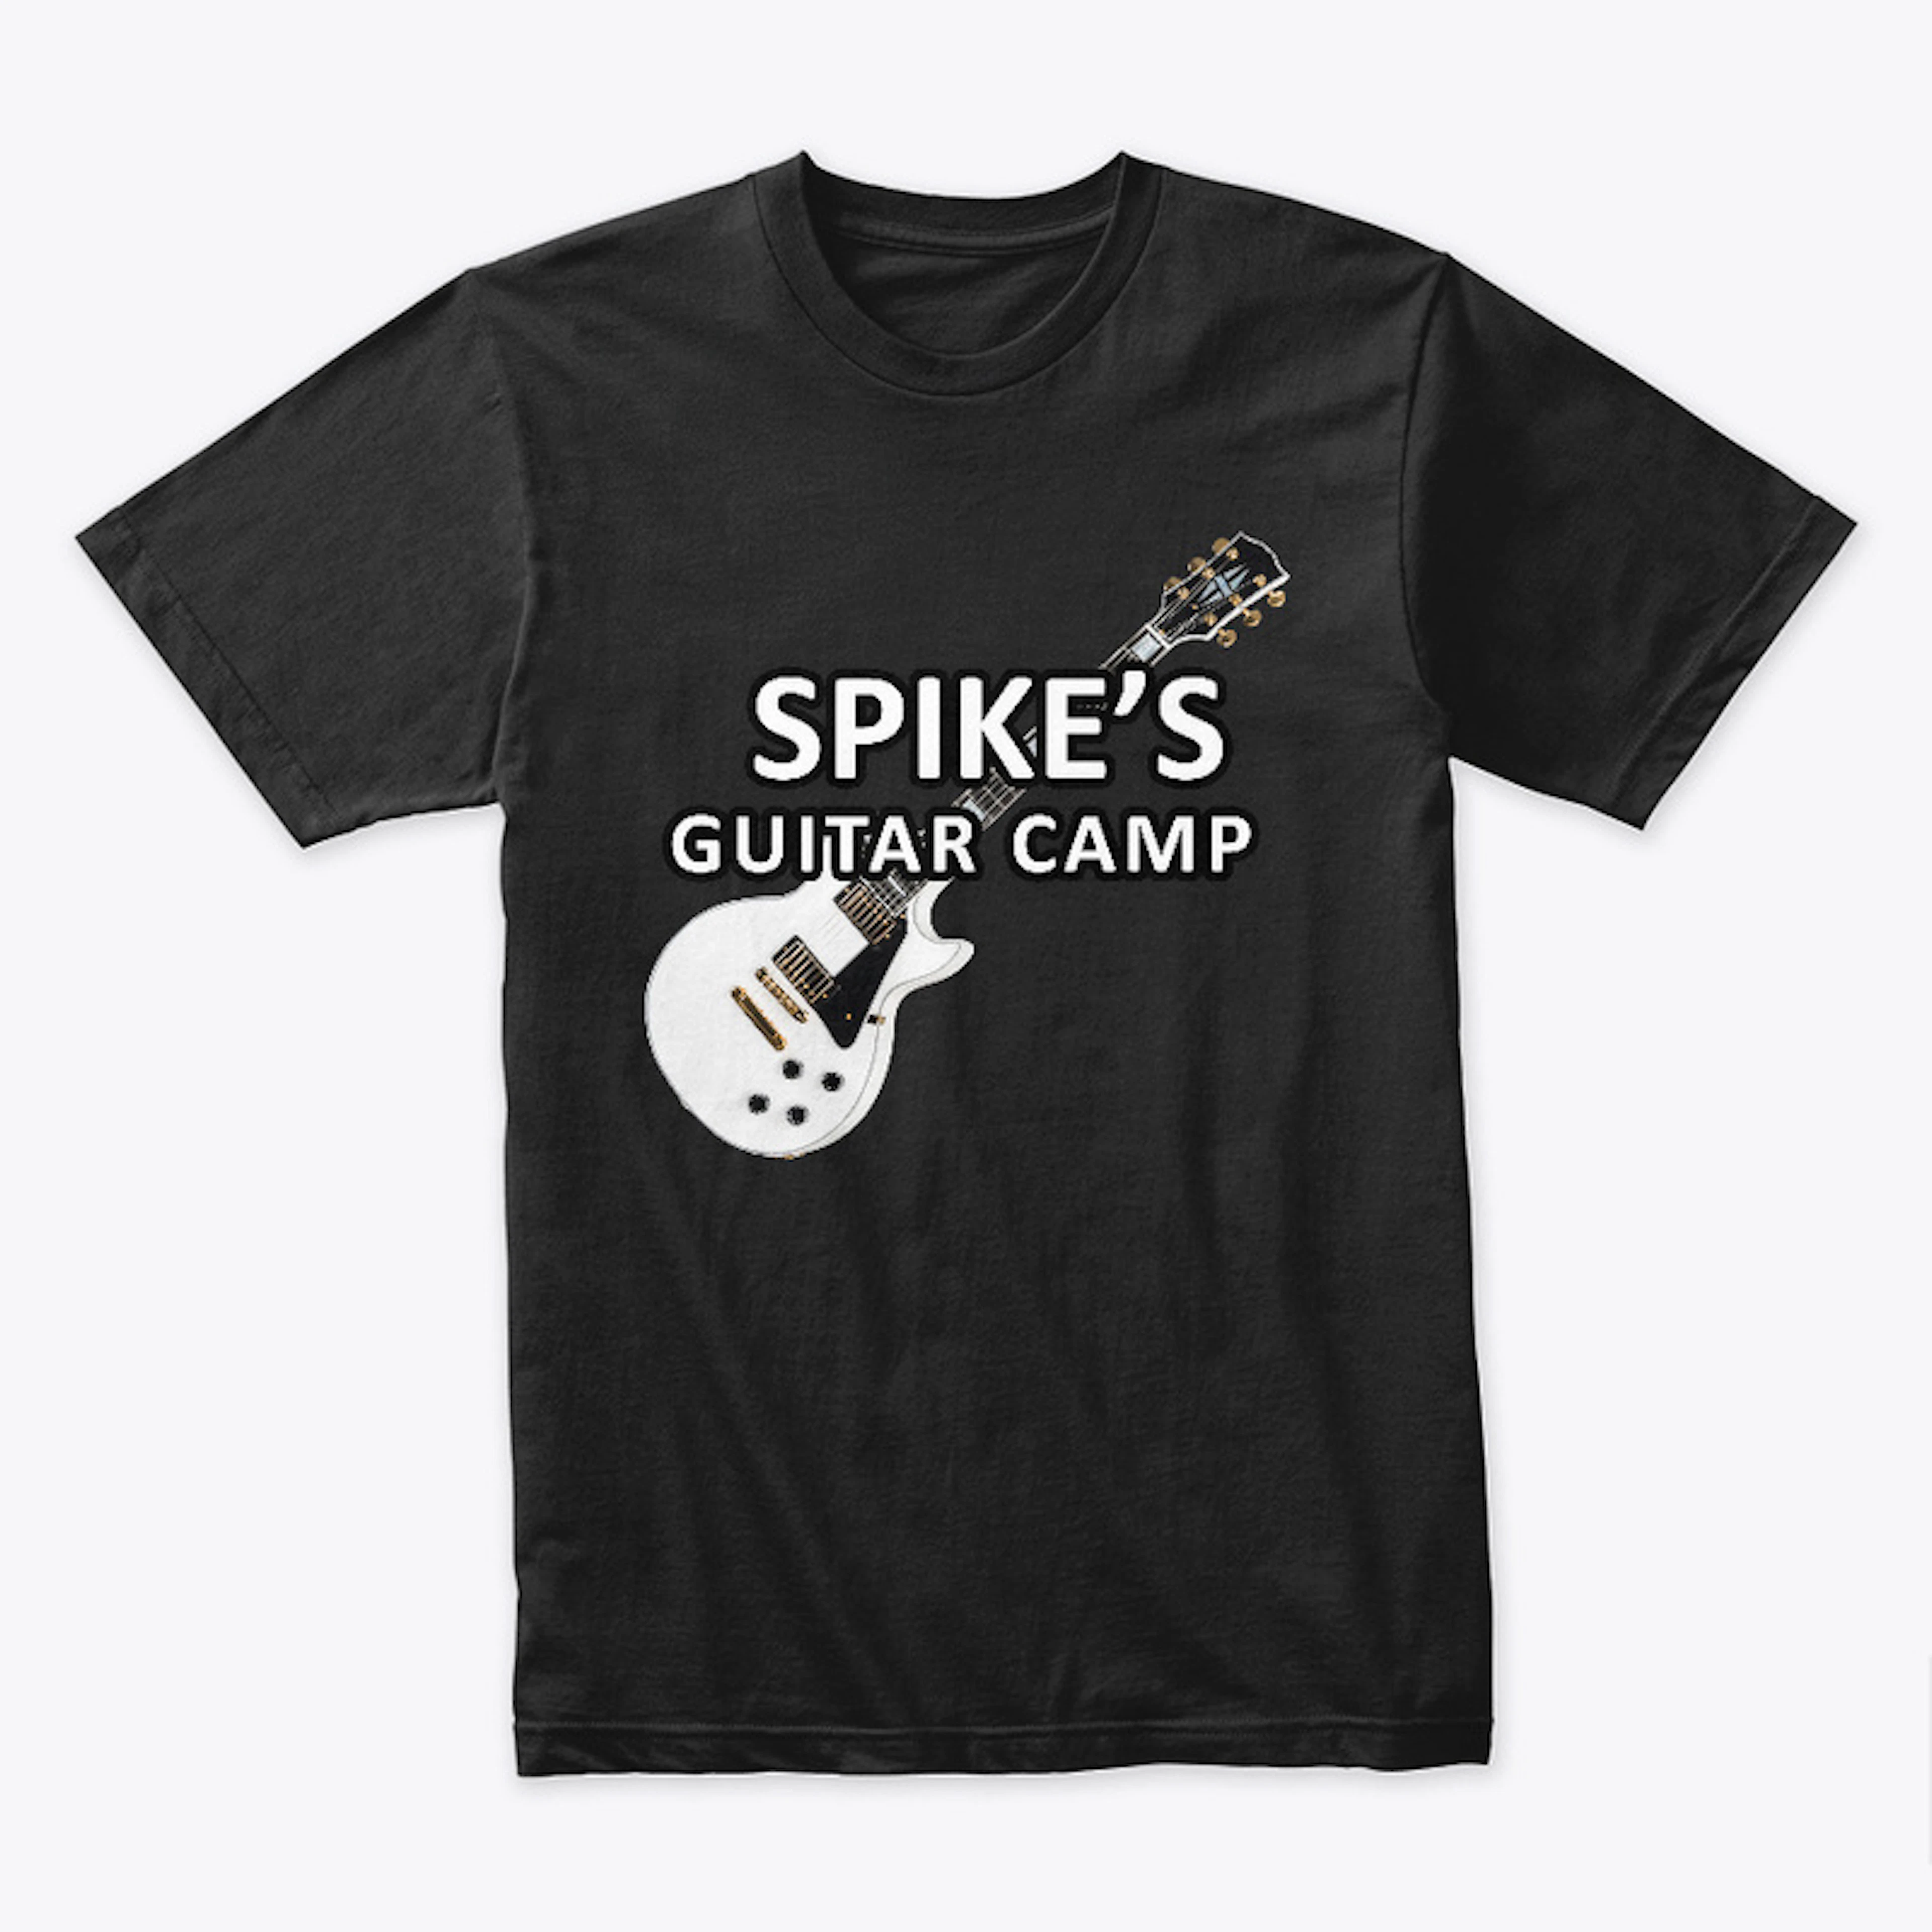 SPIKE'S GUITAR CAMP - BLACK